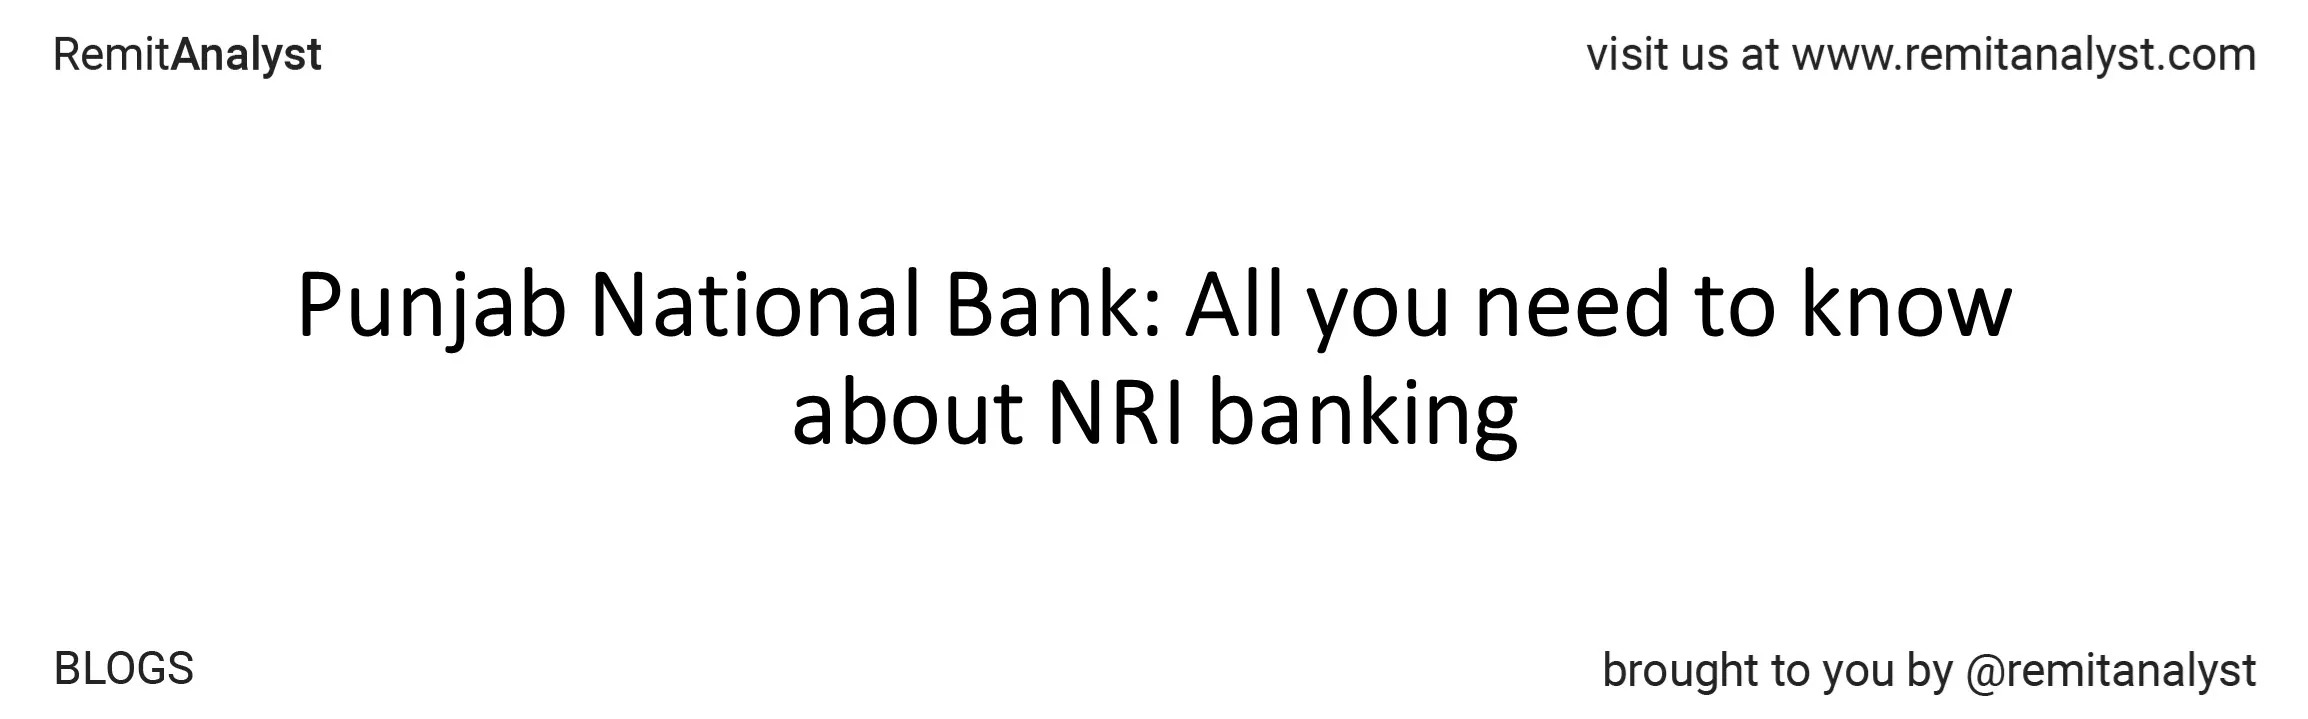 pnb-bank-nri-services-title